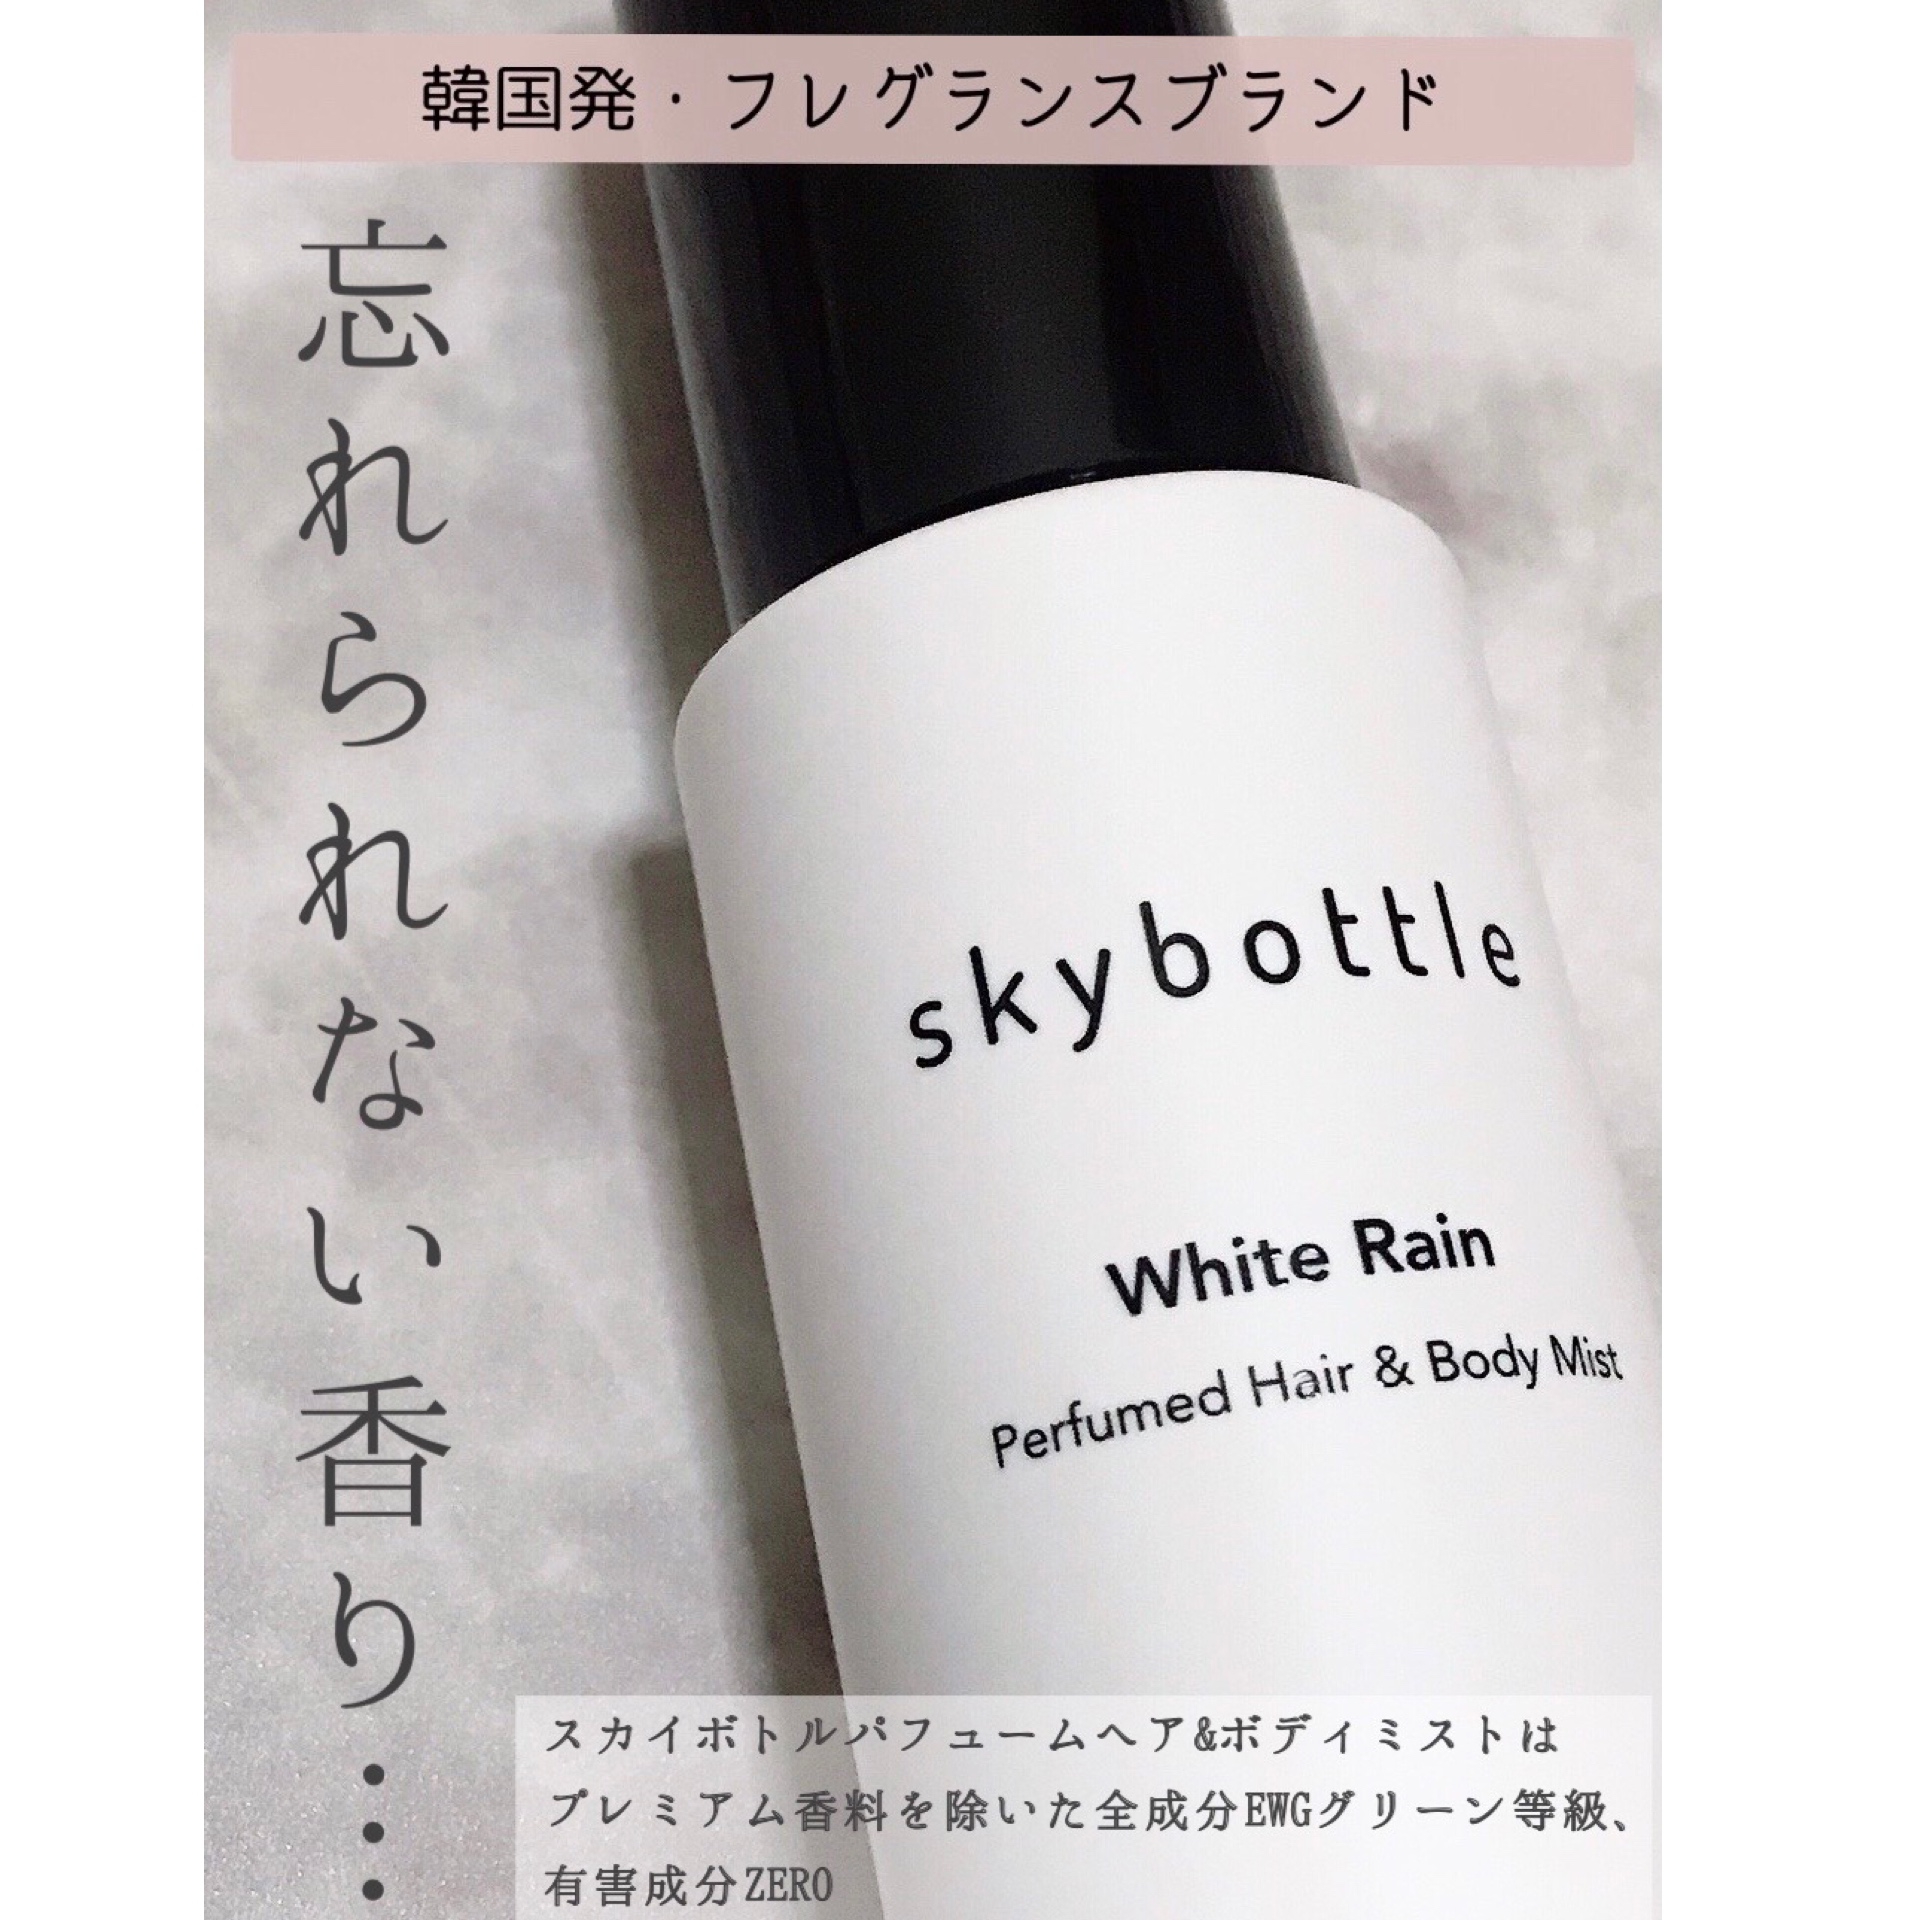 SKYBOTTLE  WHITE RAIN Hair&Body Mistを使ったMarukoさんのクチコミ画像2